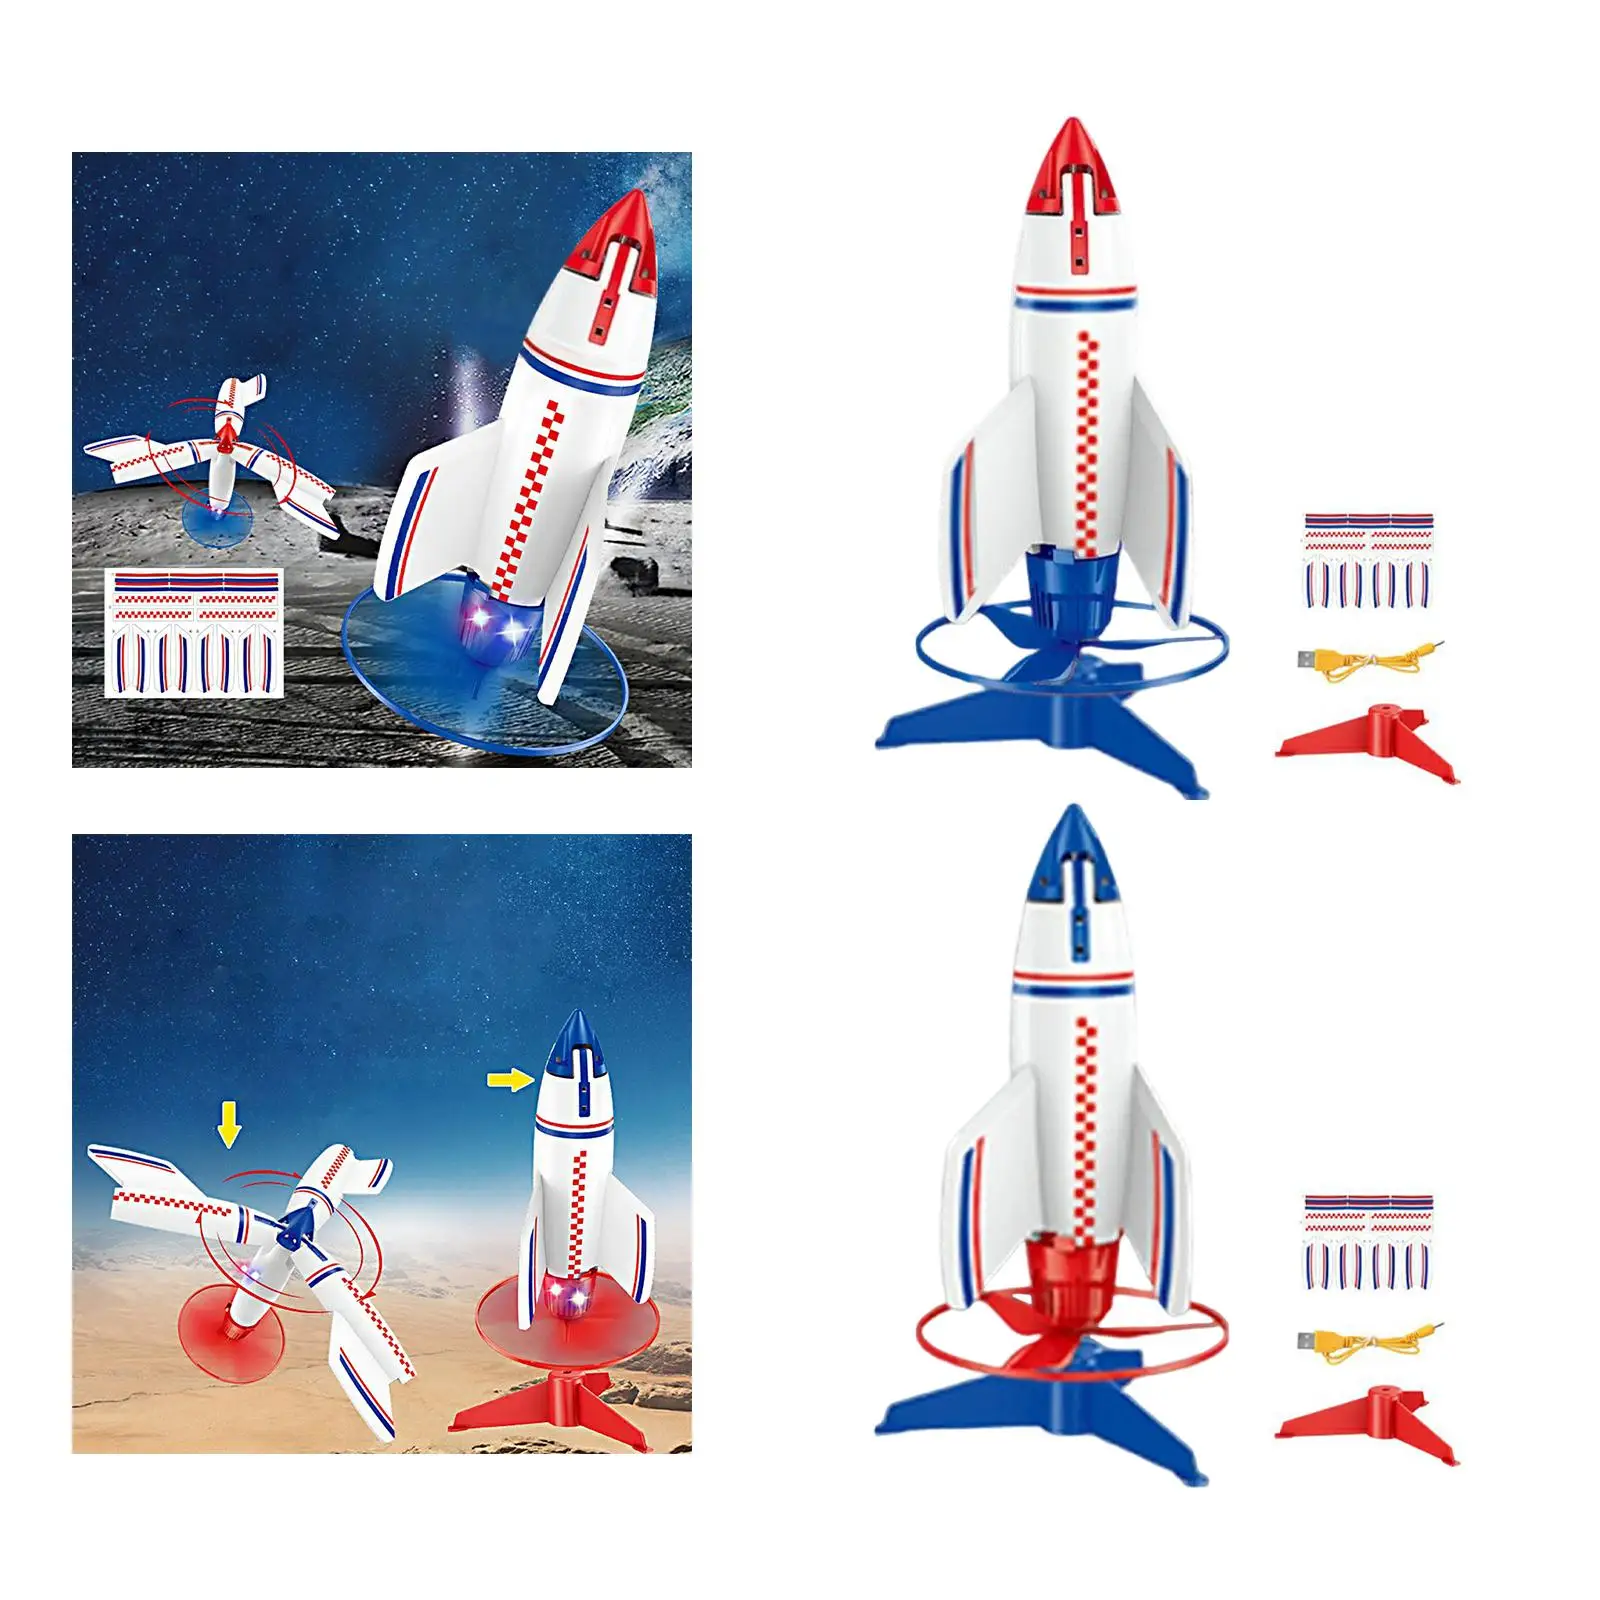 Rocket Launcher for Kids High Flying Rockets Model Games Activities